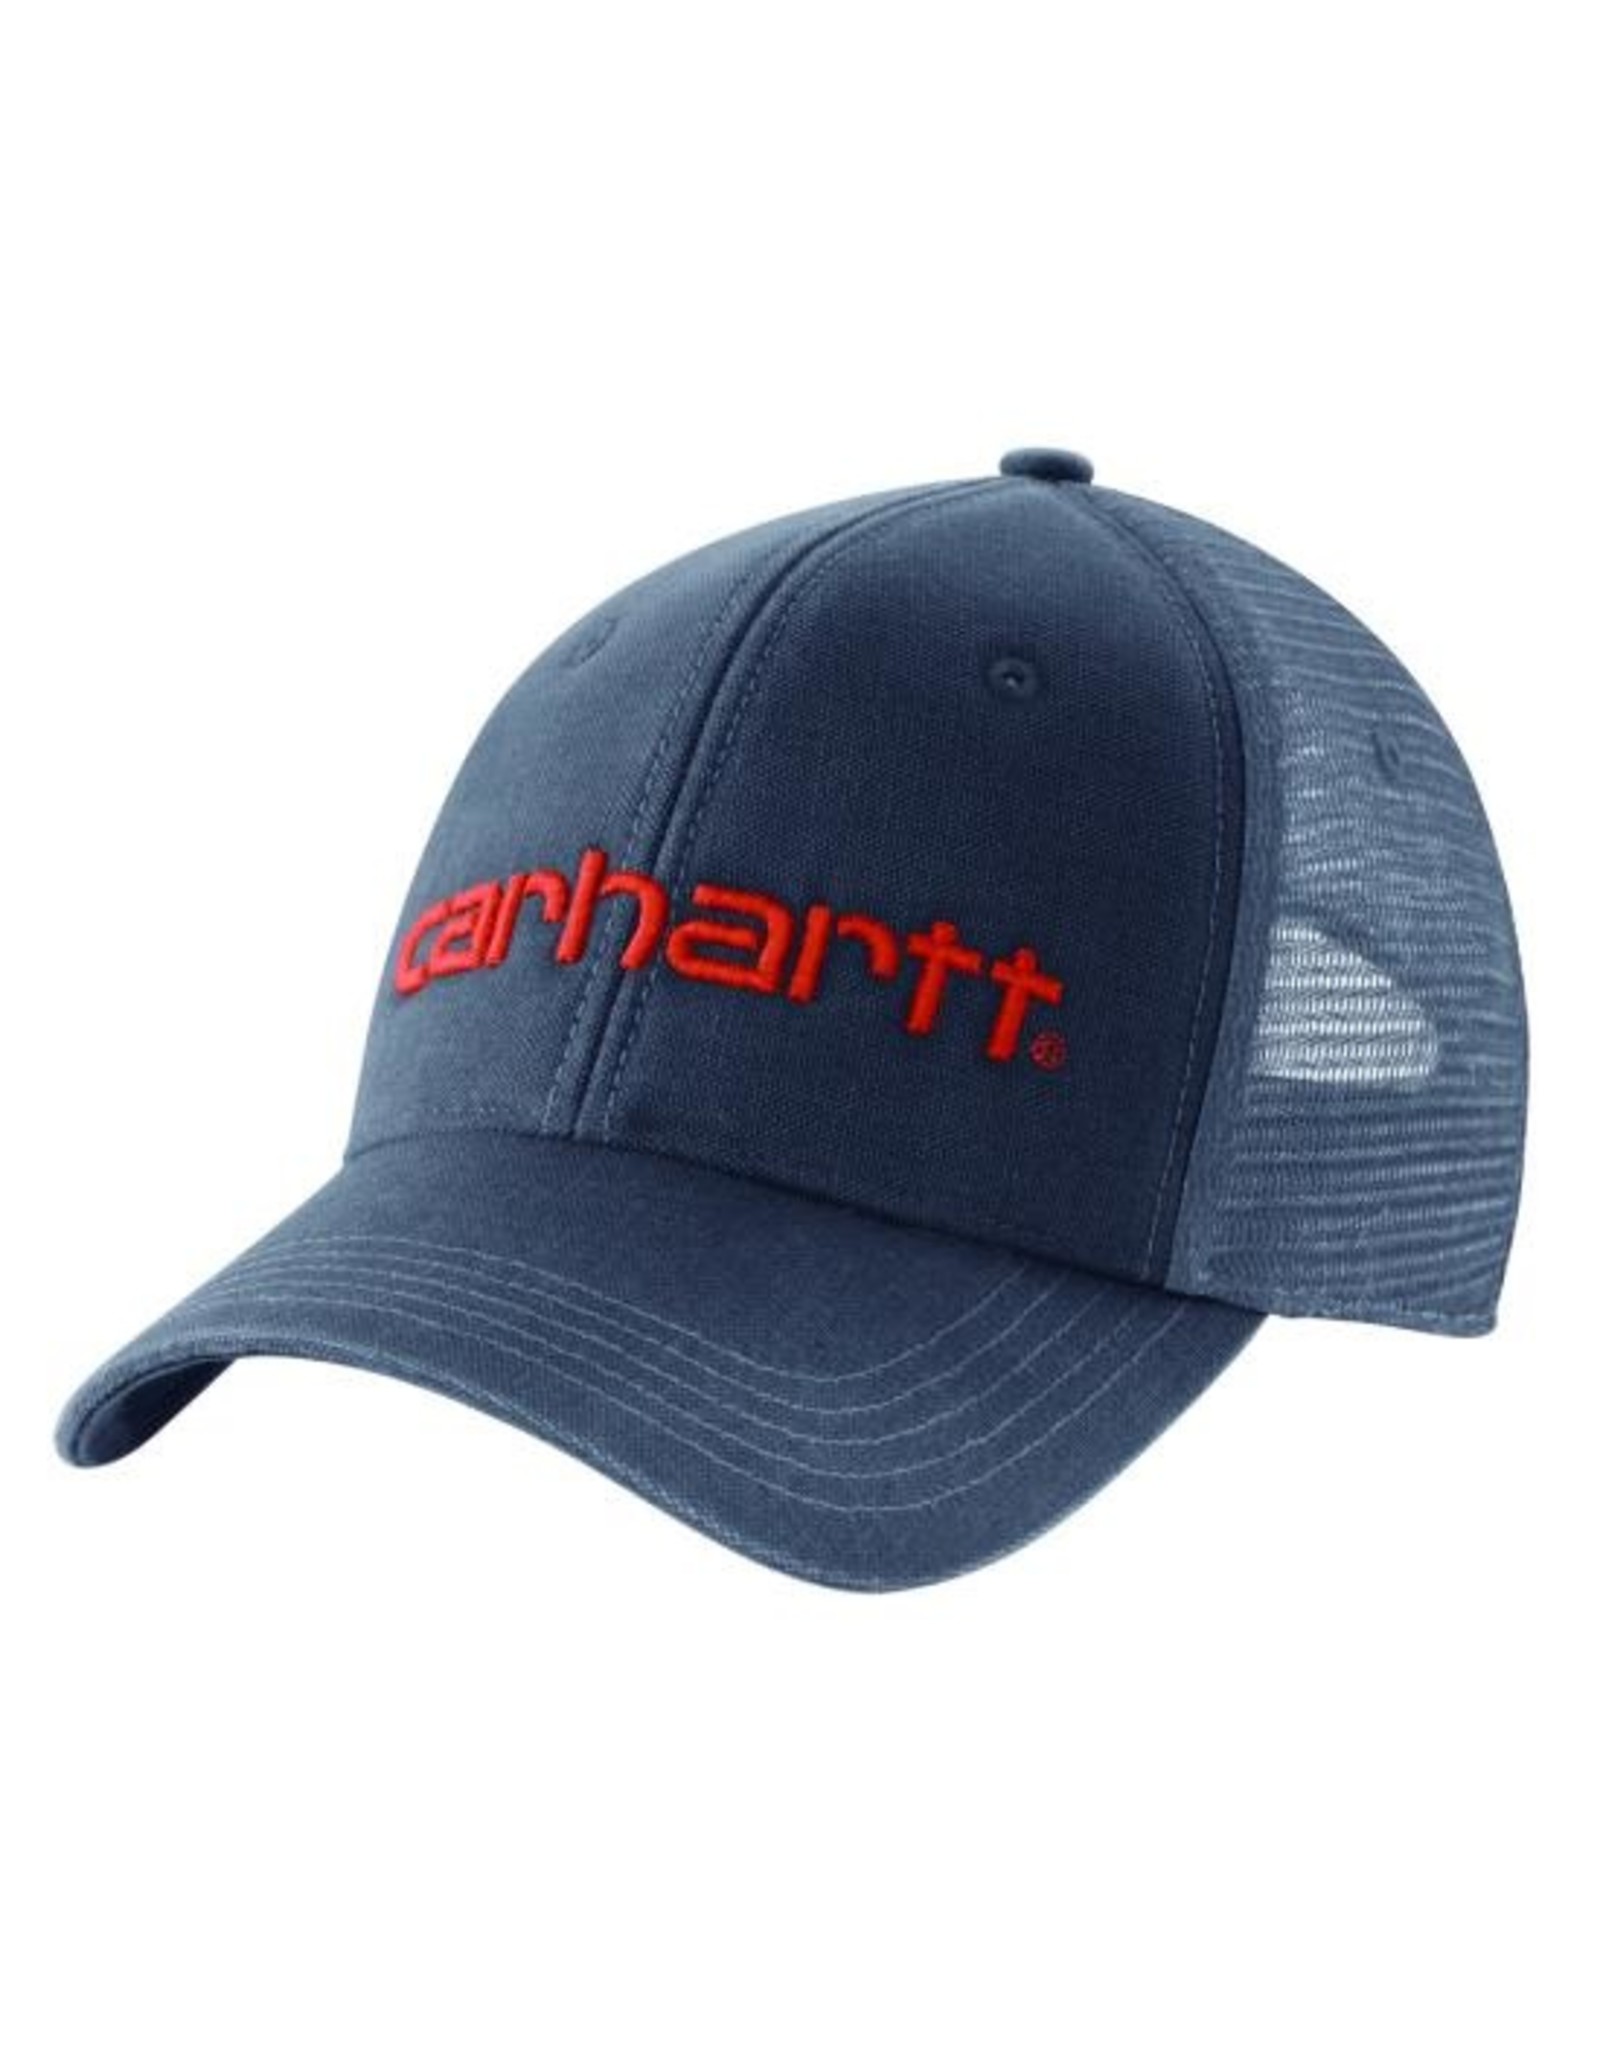 Carhartt Force 101195 Cap